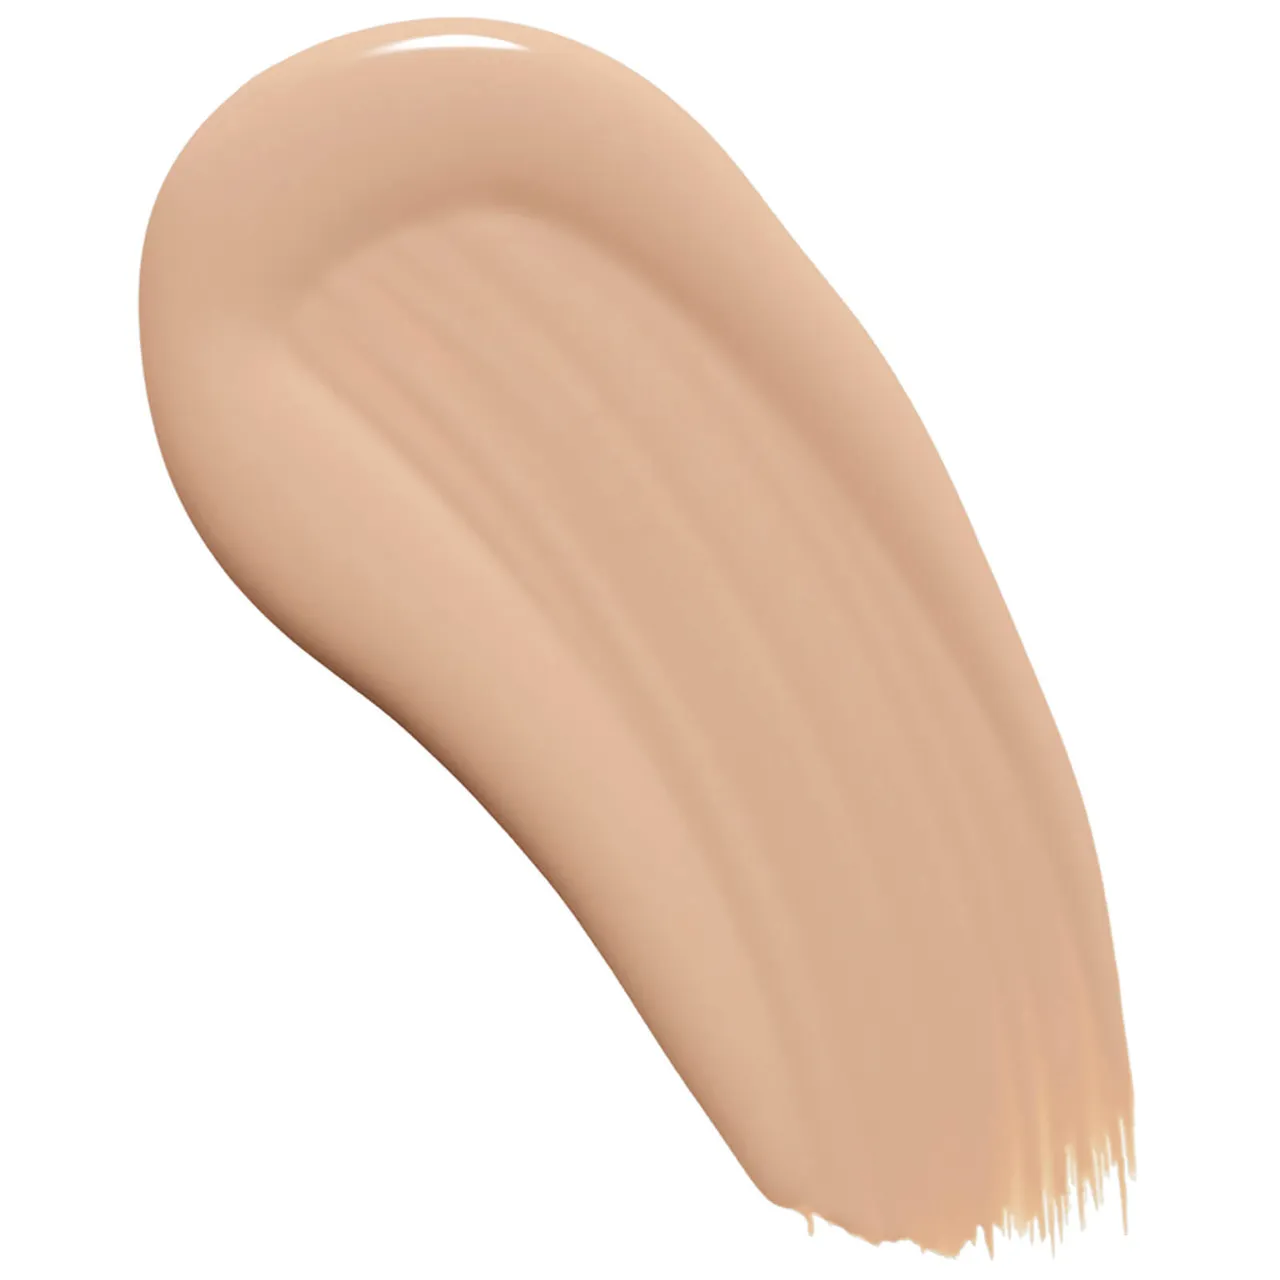 Estée Lauder Double Wear Sheer Long-Wear Makeup SPF 20 30ml (Various Shades) - 1N1 Ivory Nude